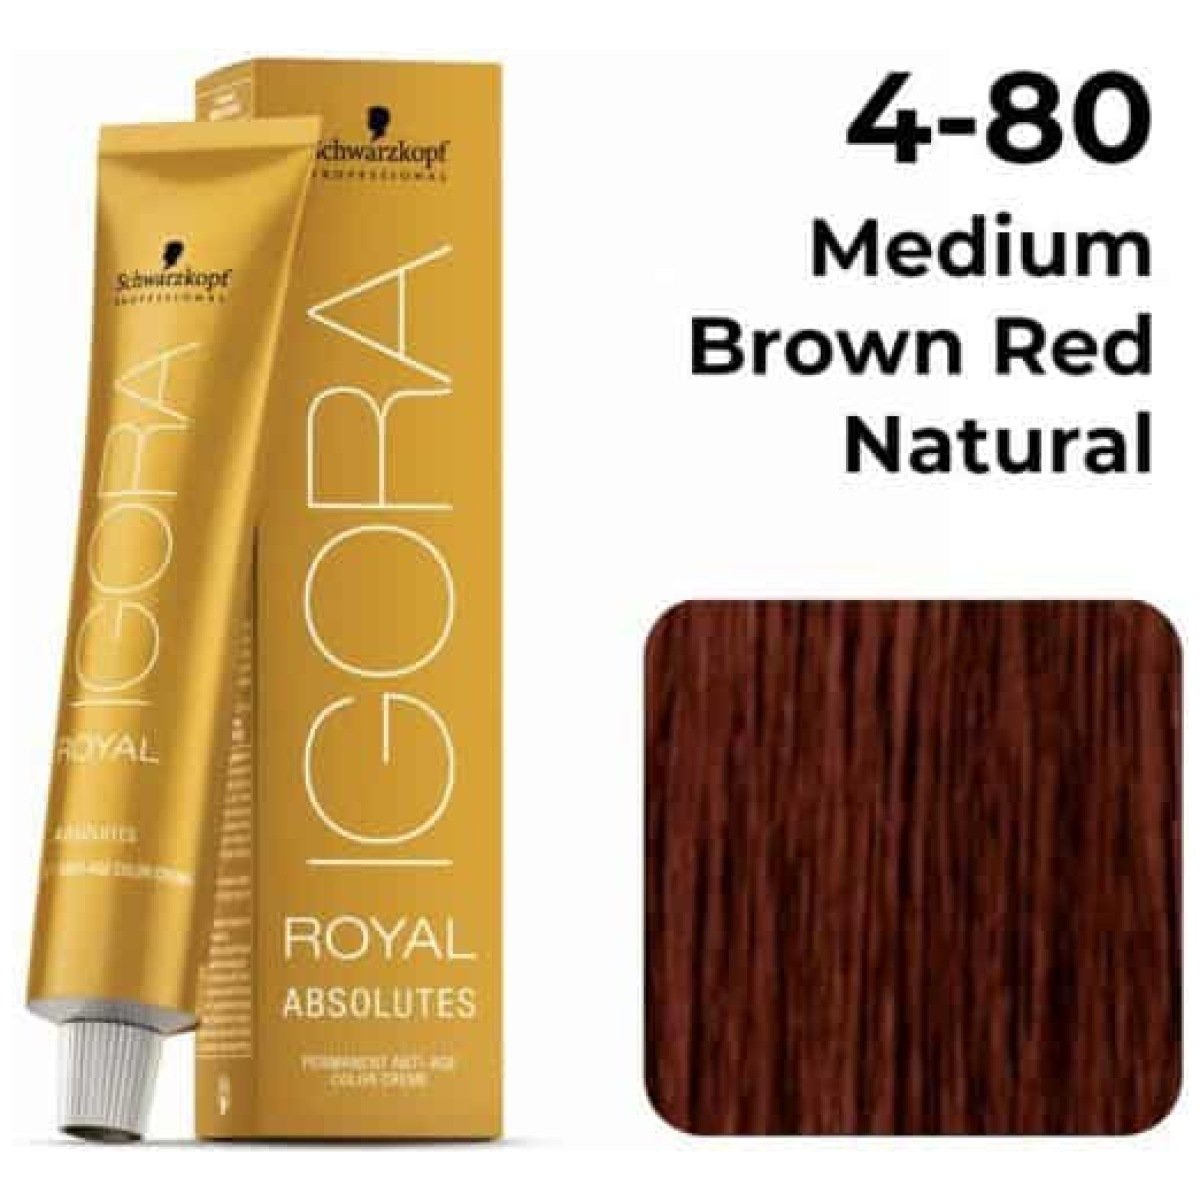 Schwarzkopf Professionals Igora Royal Absolutes Hair Color 60ml 4-80 Medium Brown Red Natural